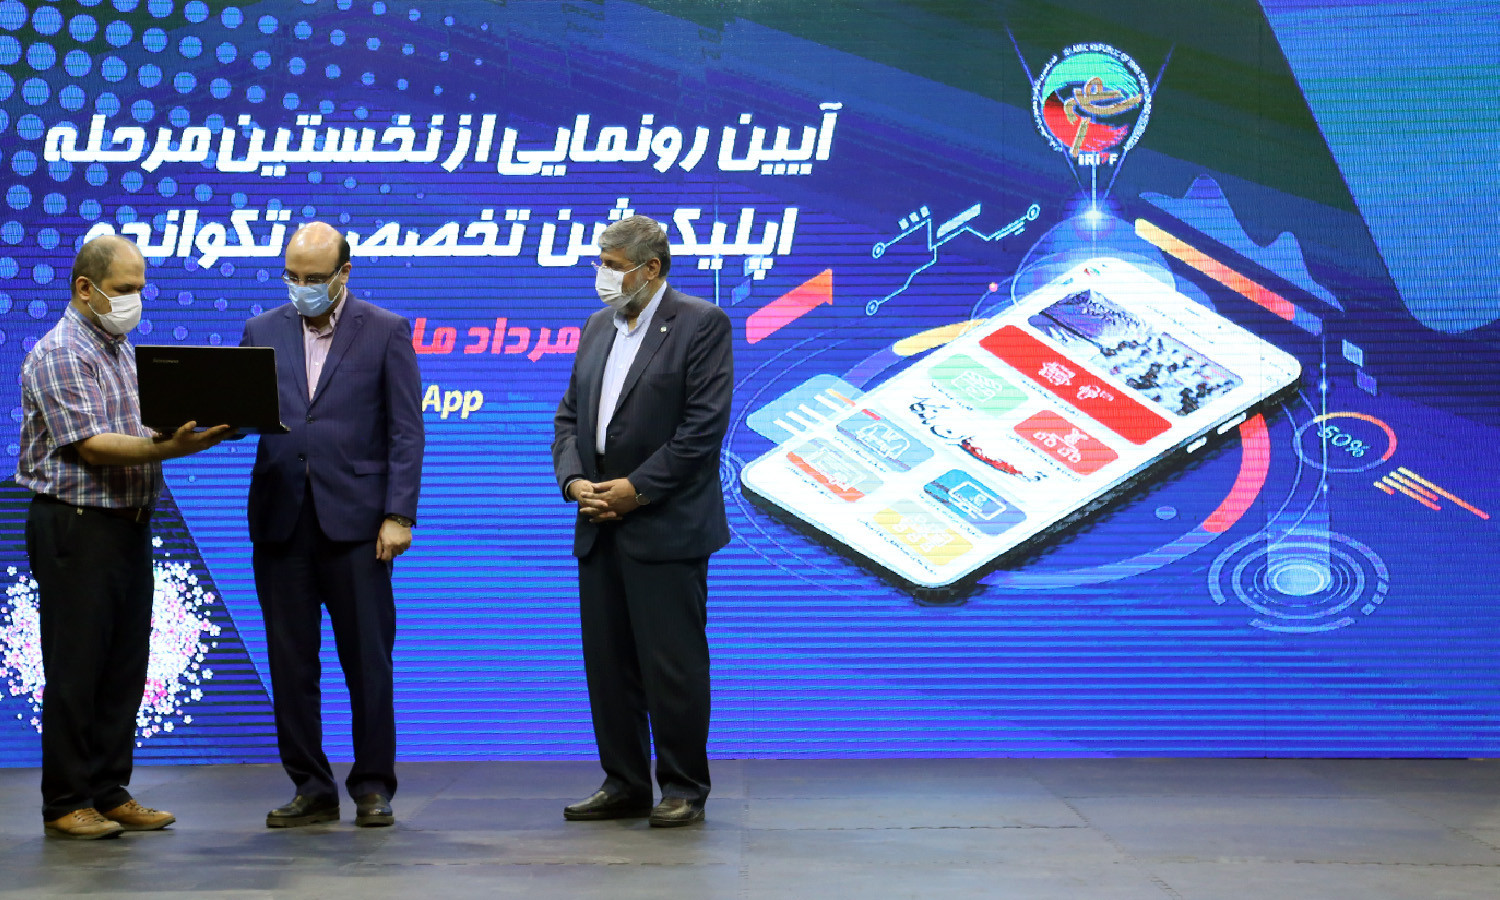 The Iran Taekwondo Federation has launched a new phone application called TaekApp ©OCA